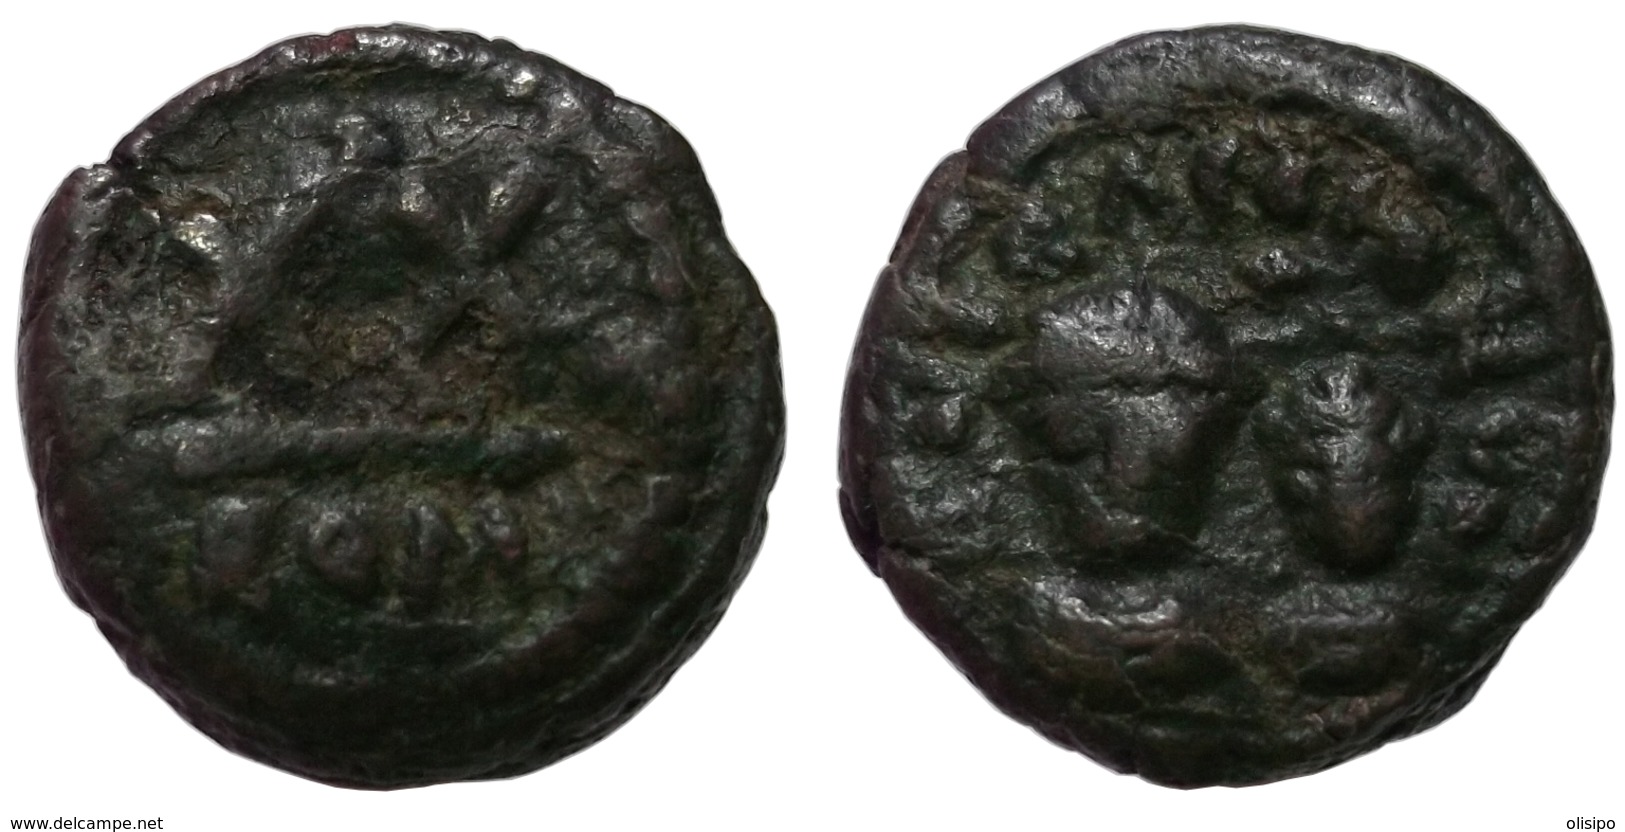 AE Half Follis - Heraclius (610-641 AD) Byzantine Empire - Bizantine